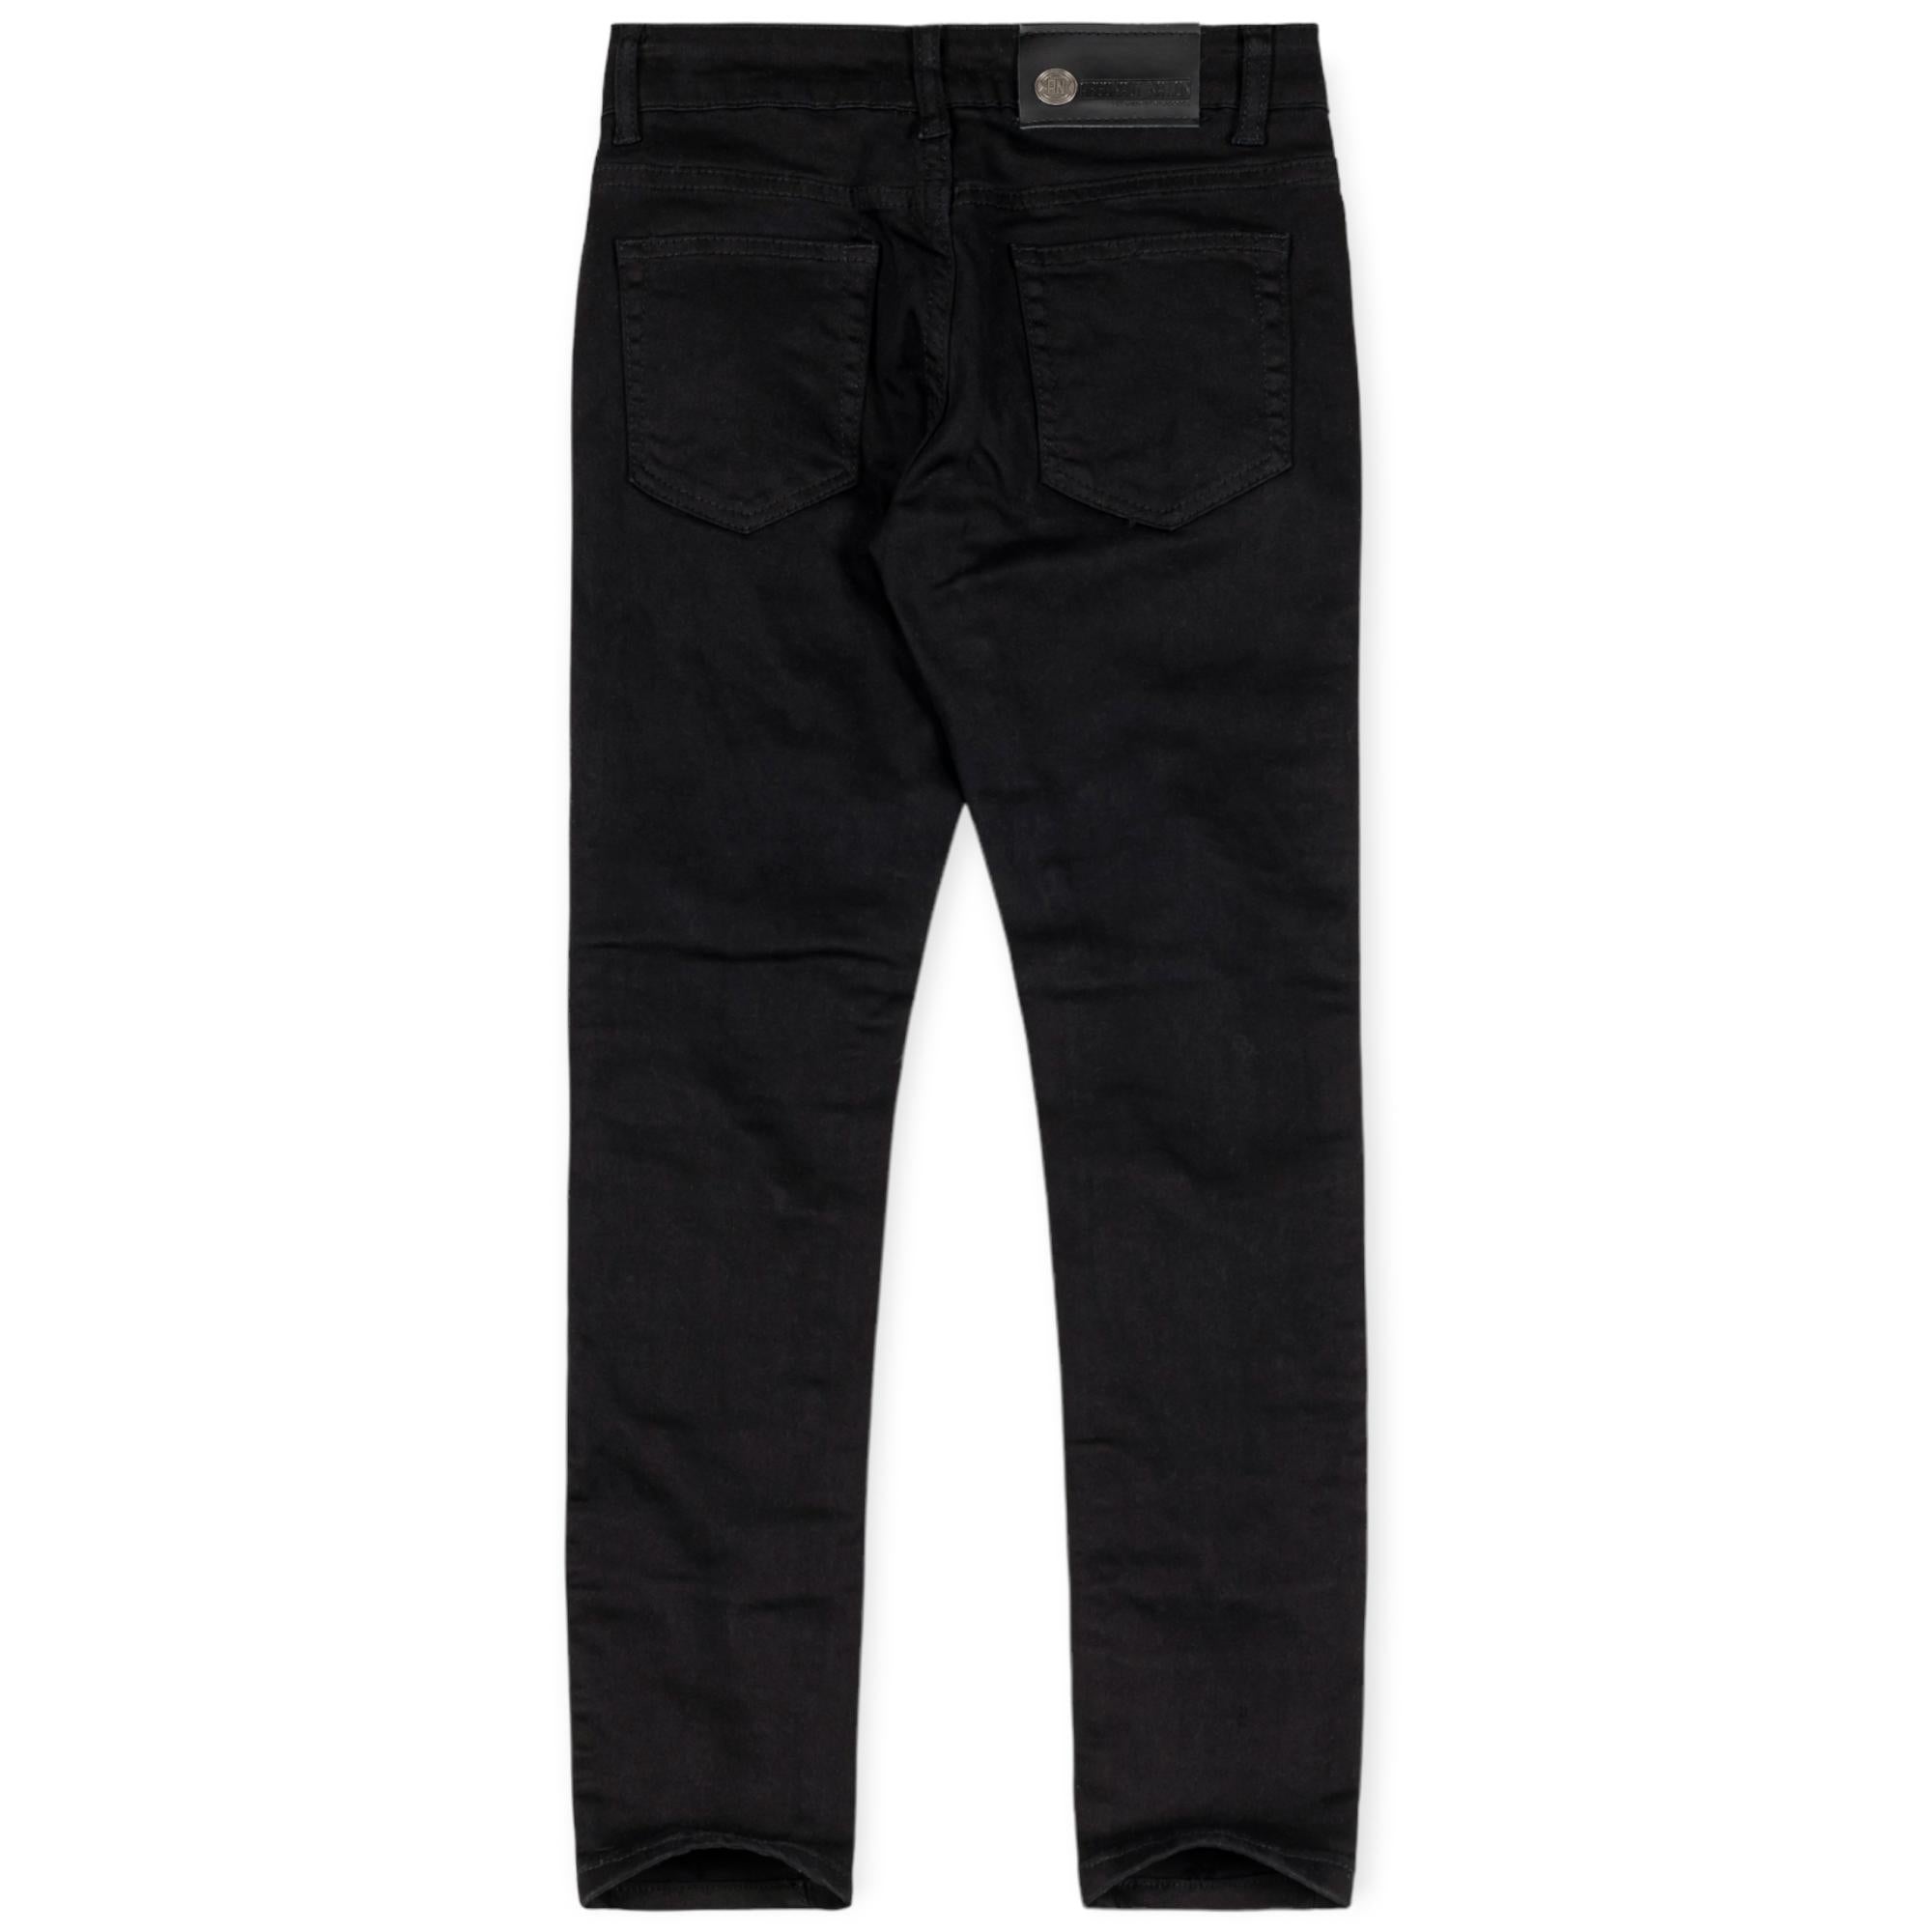 Argonaut Nations Boys Ripped Twill Jeans (Black)